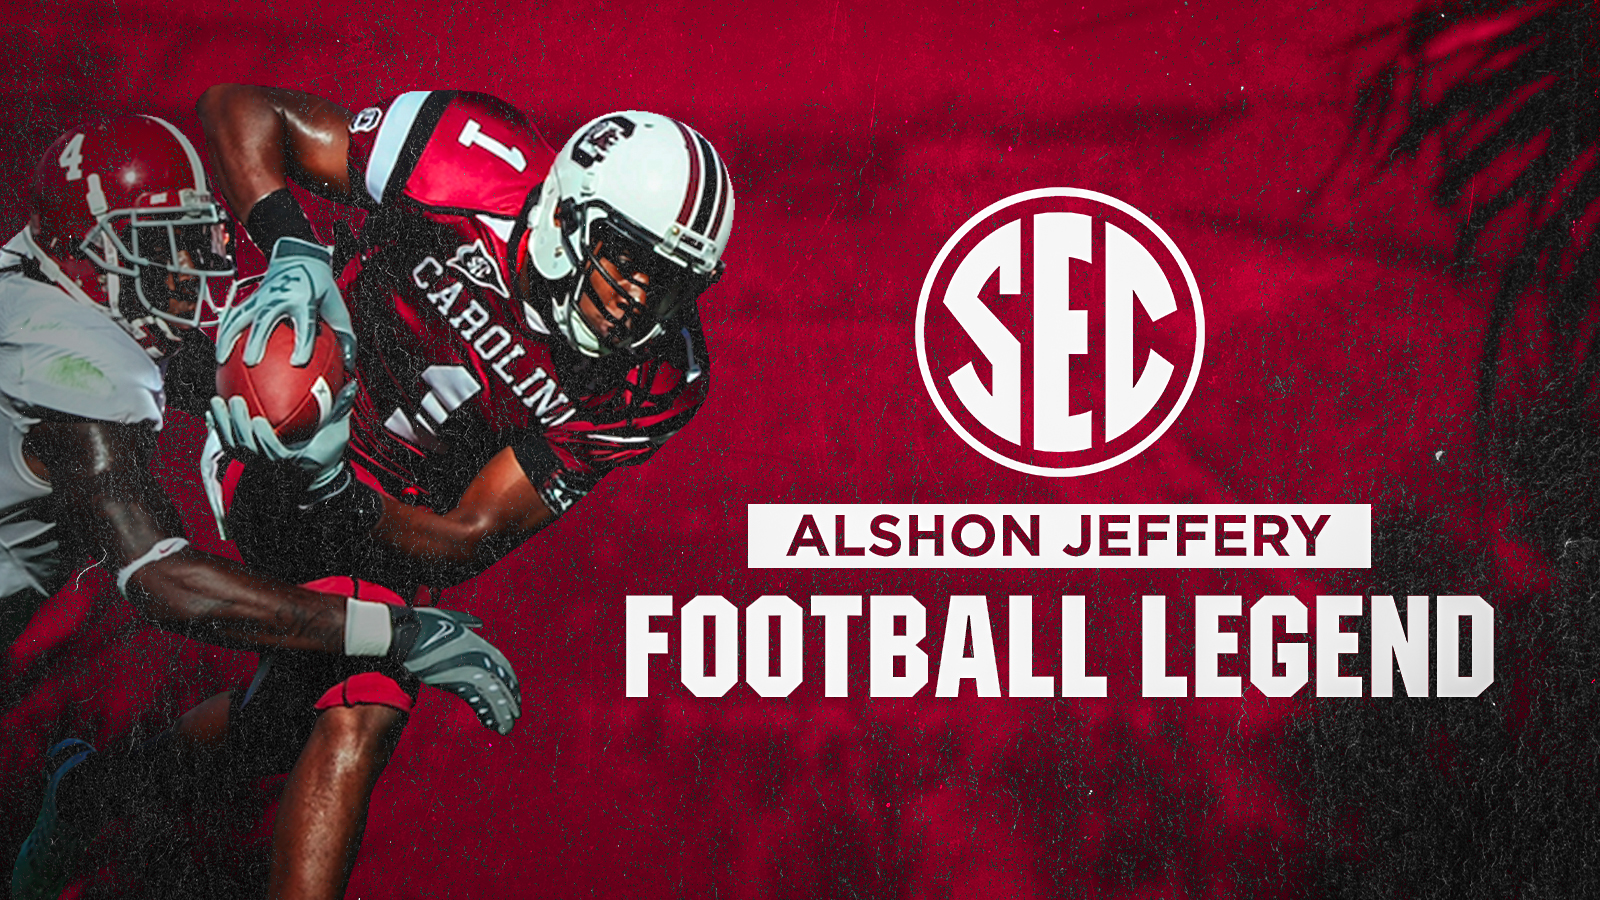 Alshon Jeffery to Represent South Carolina in SEC’s 2022 Football Legends Class